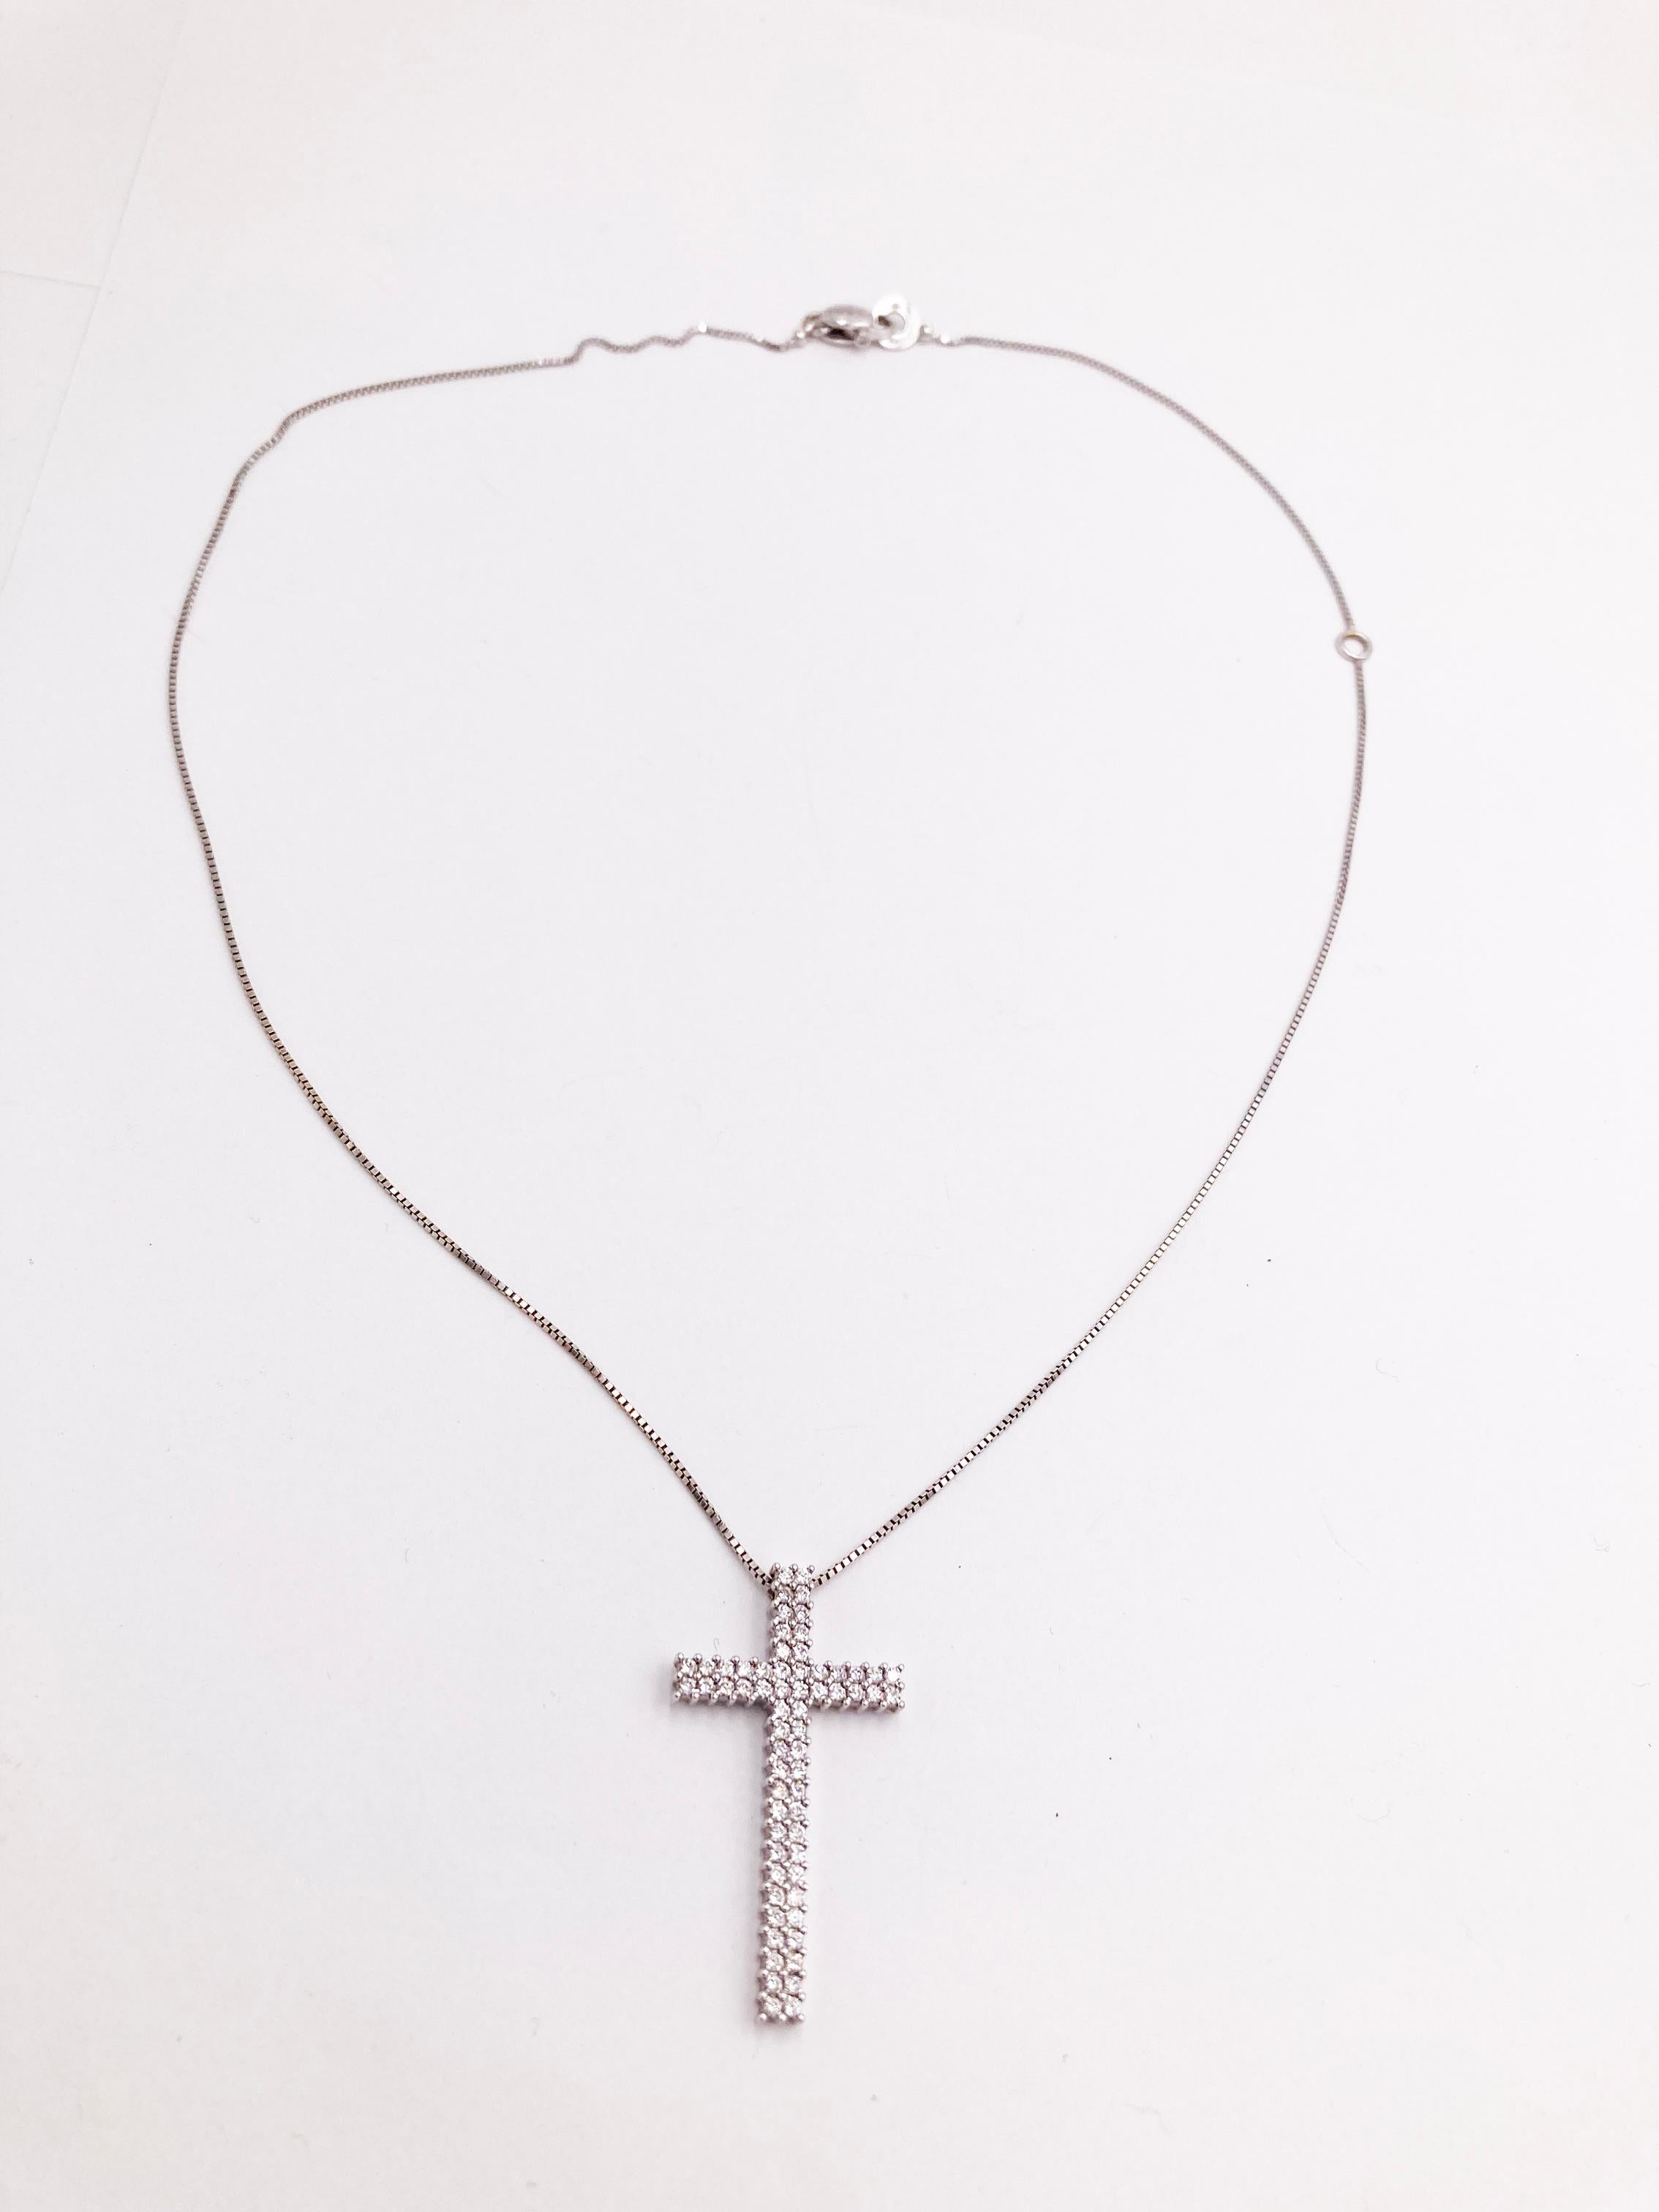 Brilliant Cut Salvini Modern 1980s Diamonds Cross 18K Gold Cube Chain Necklace Pendant  For Sale